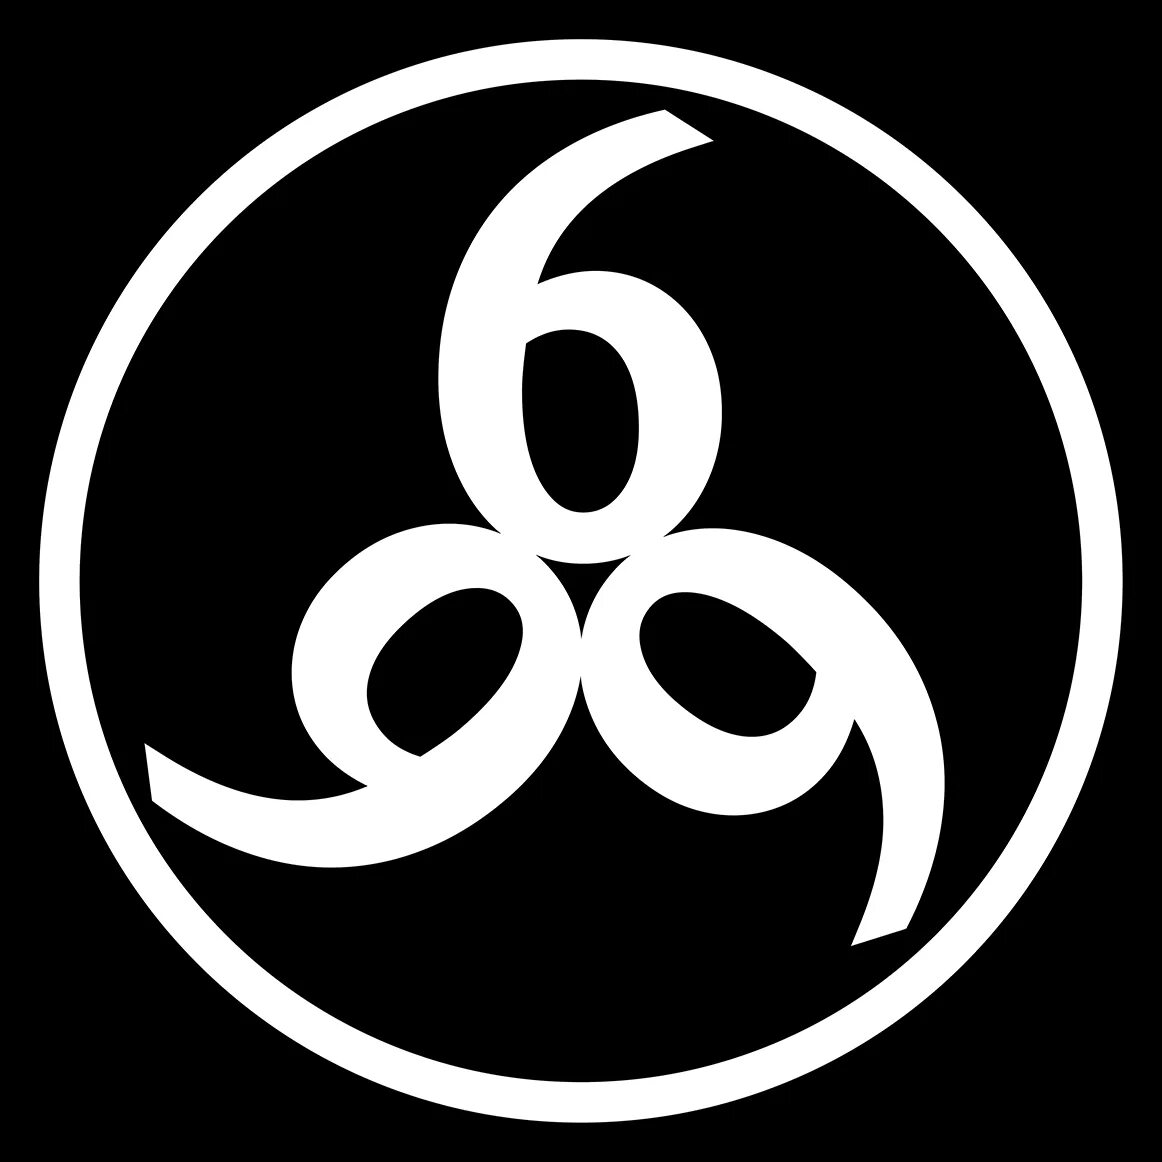 Символ 666. Логотип 666. Знак три 666. Три шестерки.